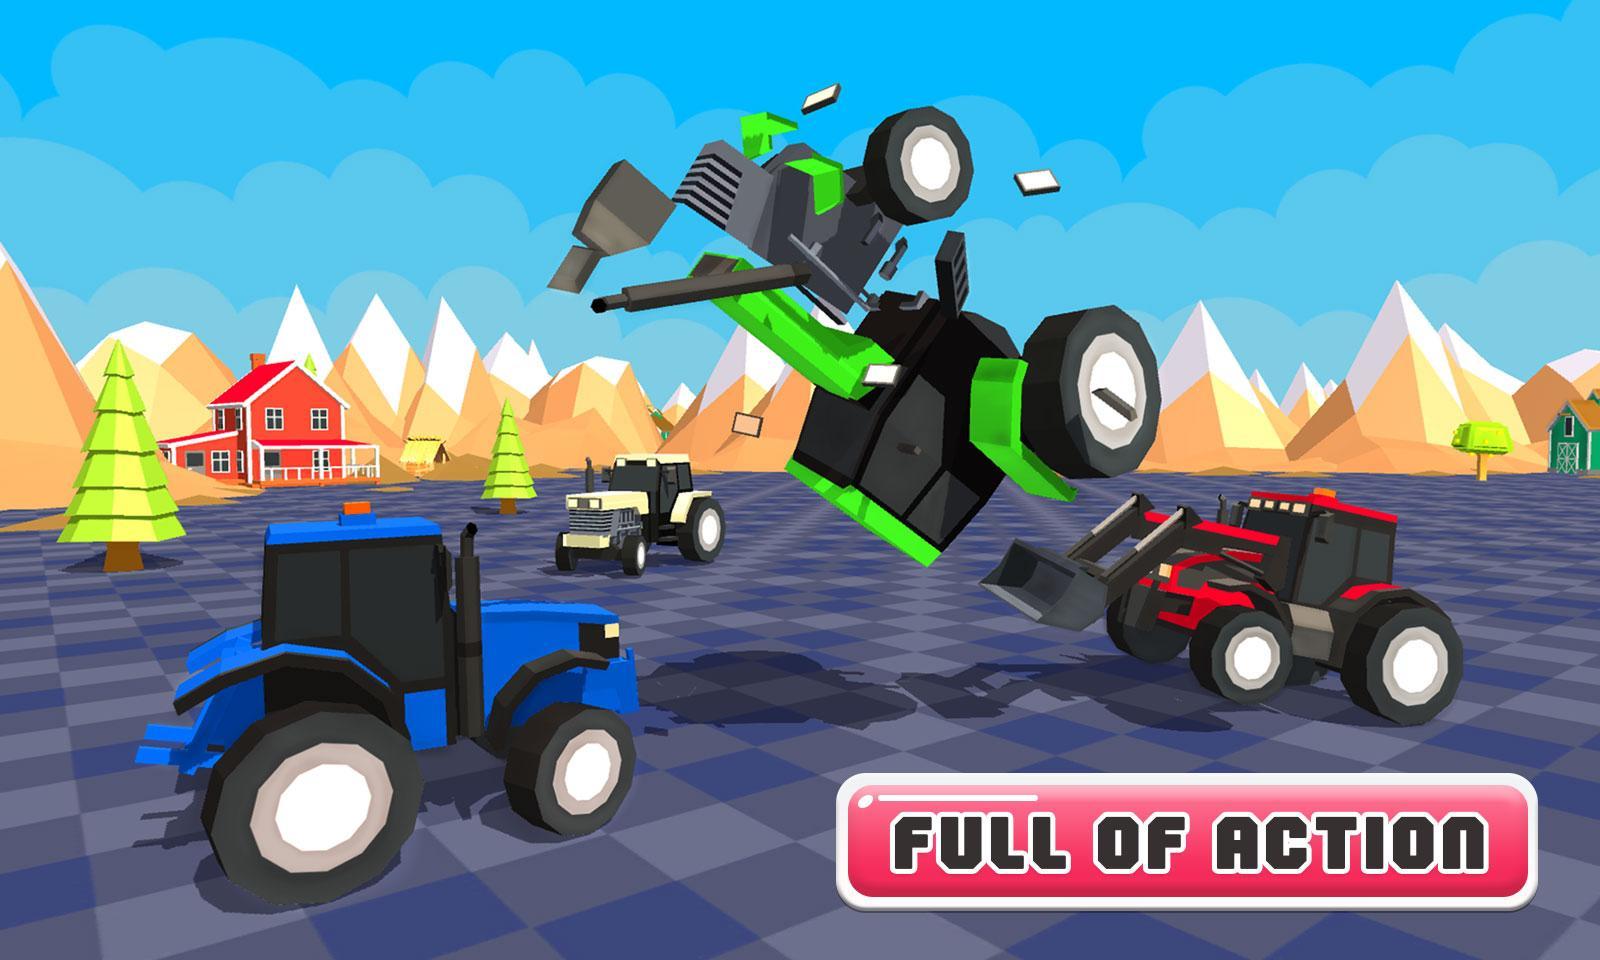 Screenshot 1 of Toy Tractor Battle နောက်ဆုံးစစ်ပွဲများ 1.0